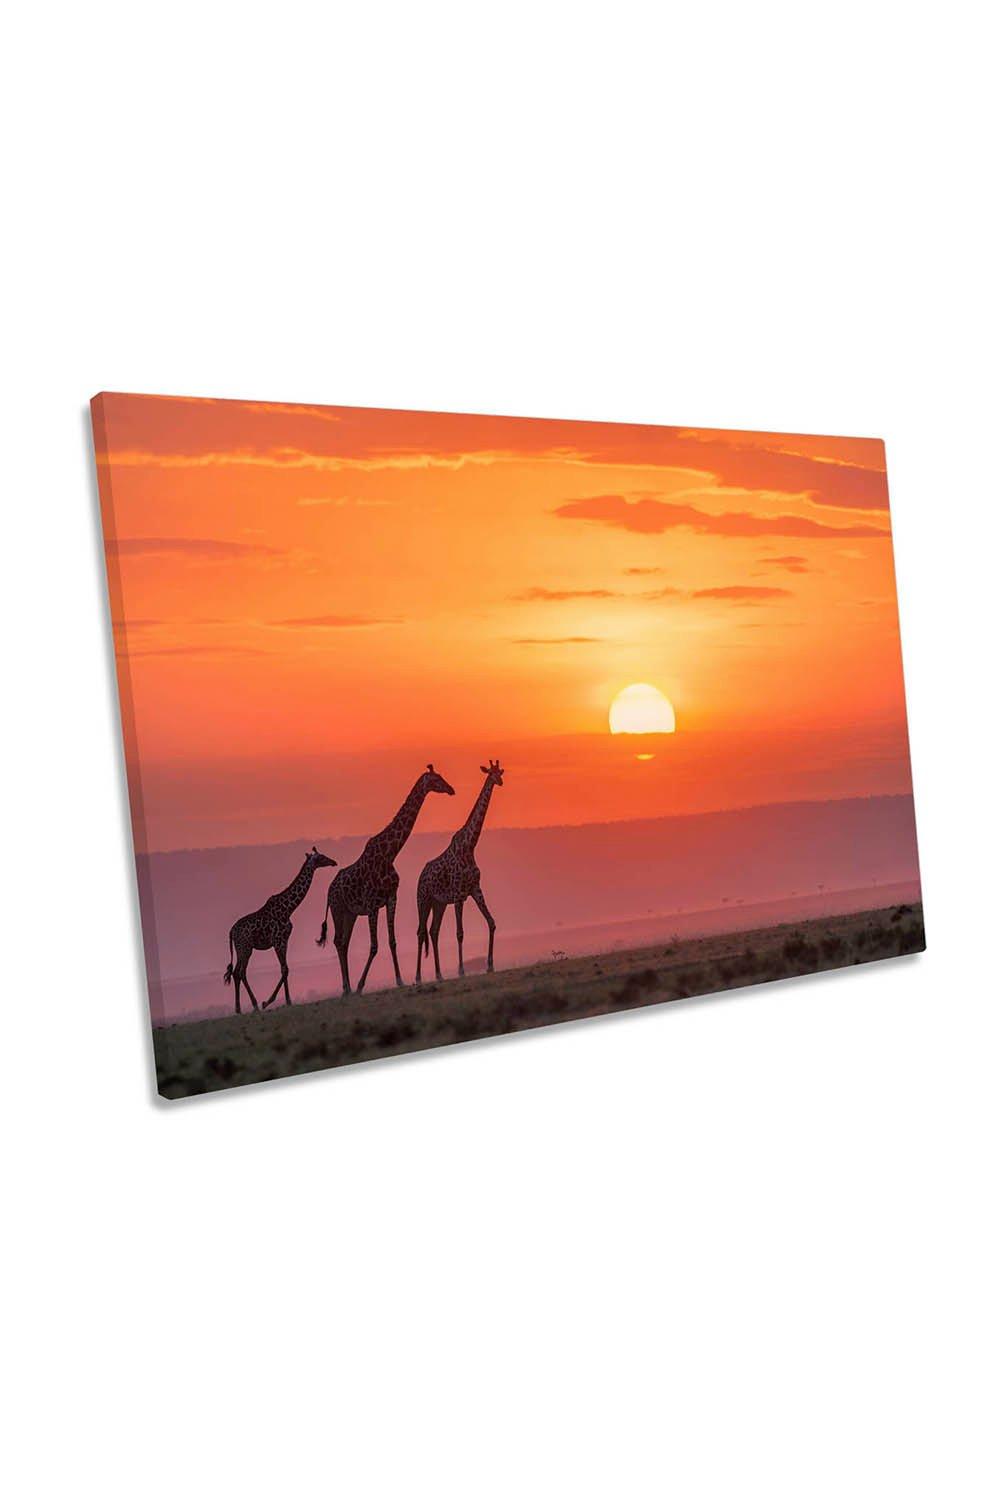 Family Walk Giraffe Sunset Orange Canvas Wall Art Picture Print